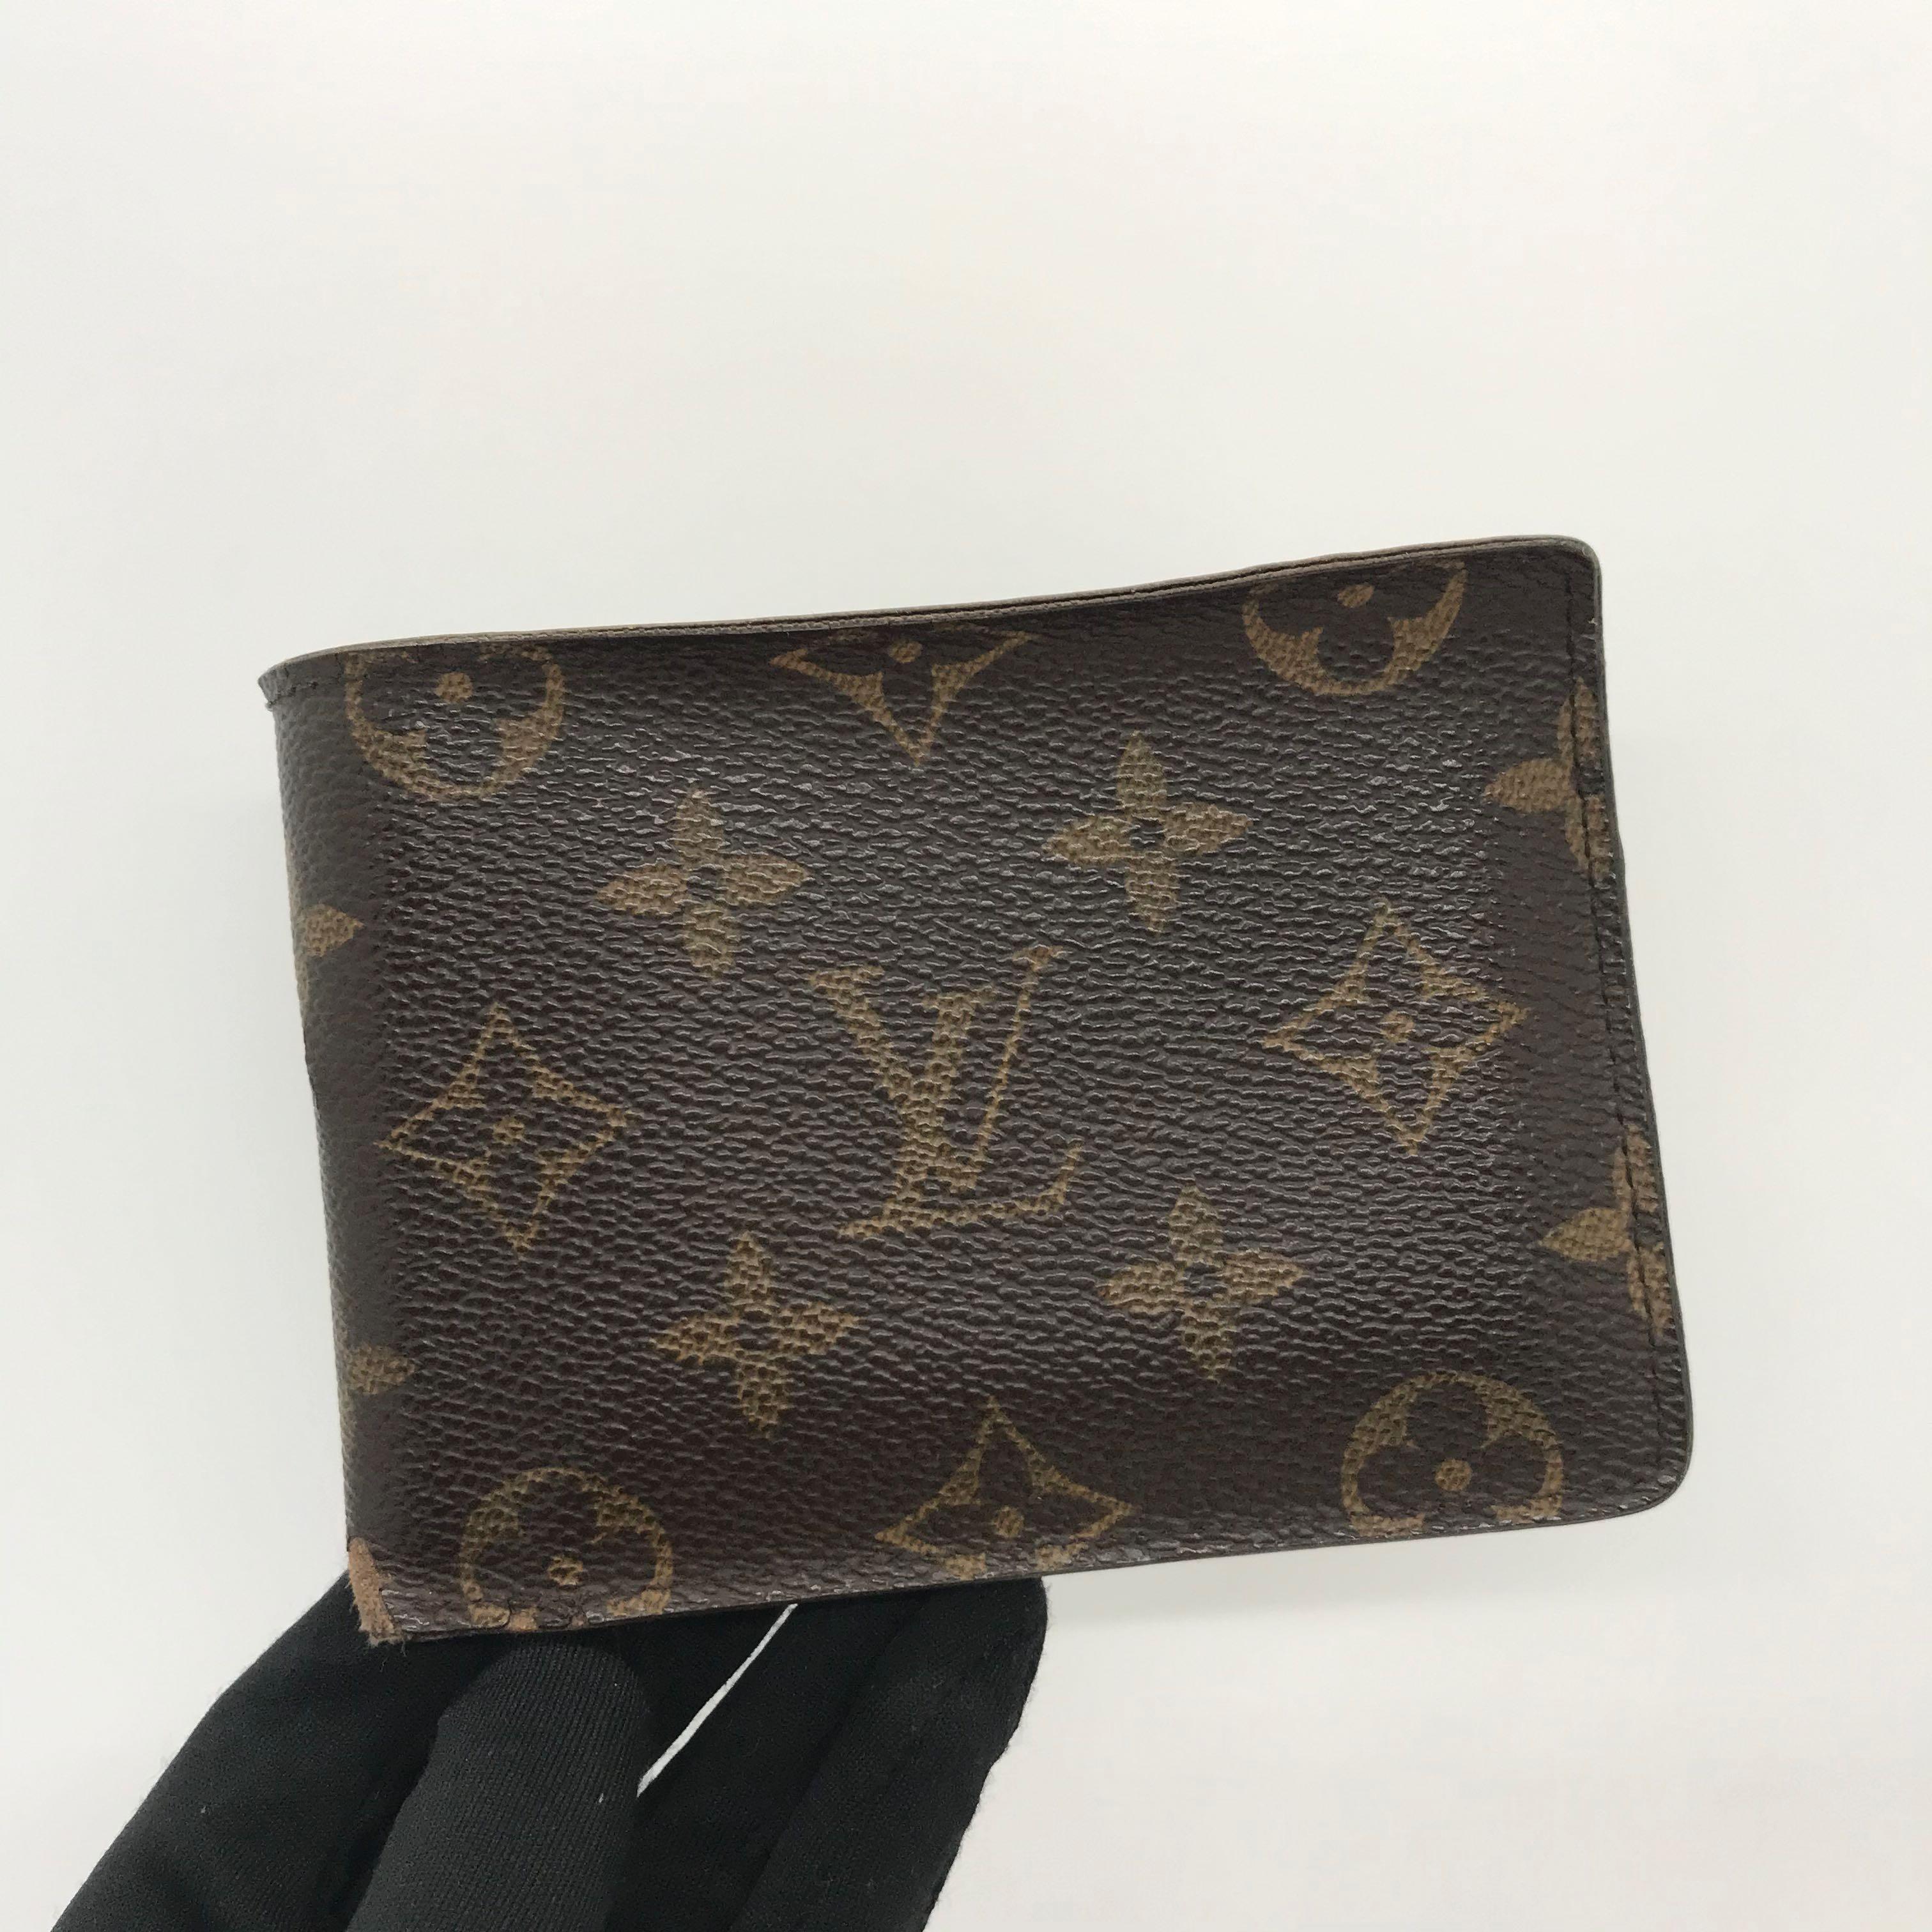 Shop Louis Vuitton MONOGRAM Multiple wallet (M60895) by MUTIARA